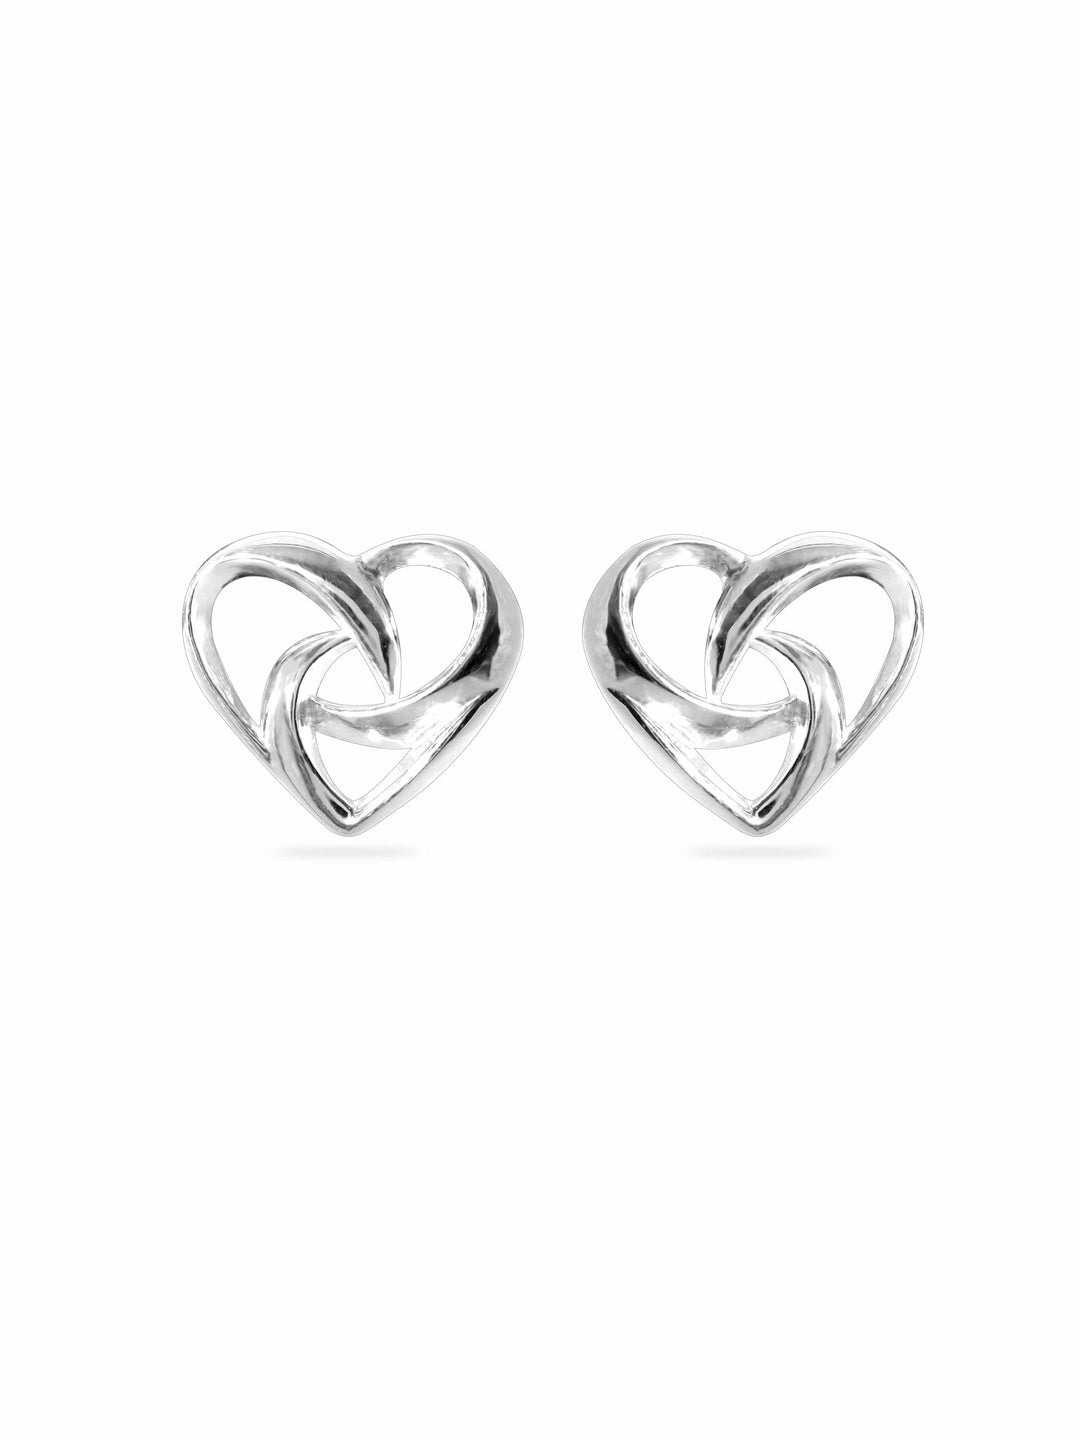 Rubans Silver Rhodium-Plated Heart Shaped Studs Earrings Earrings